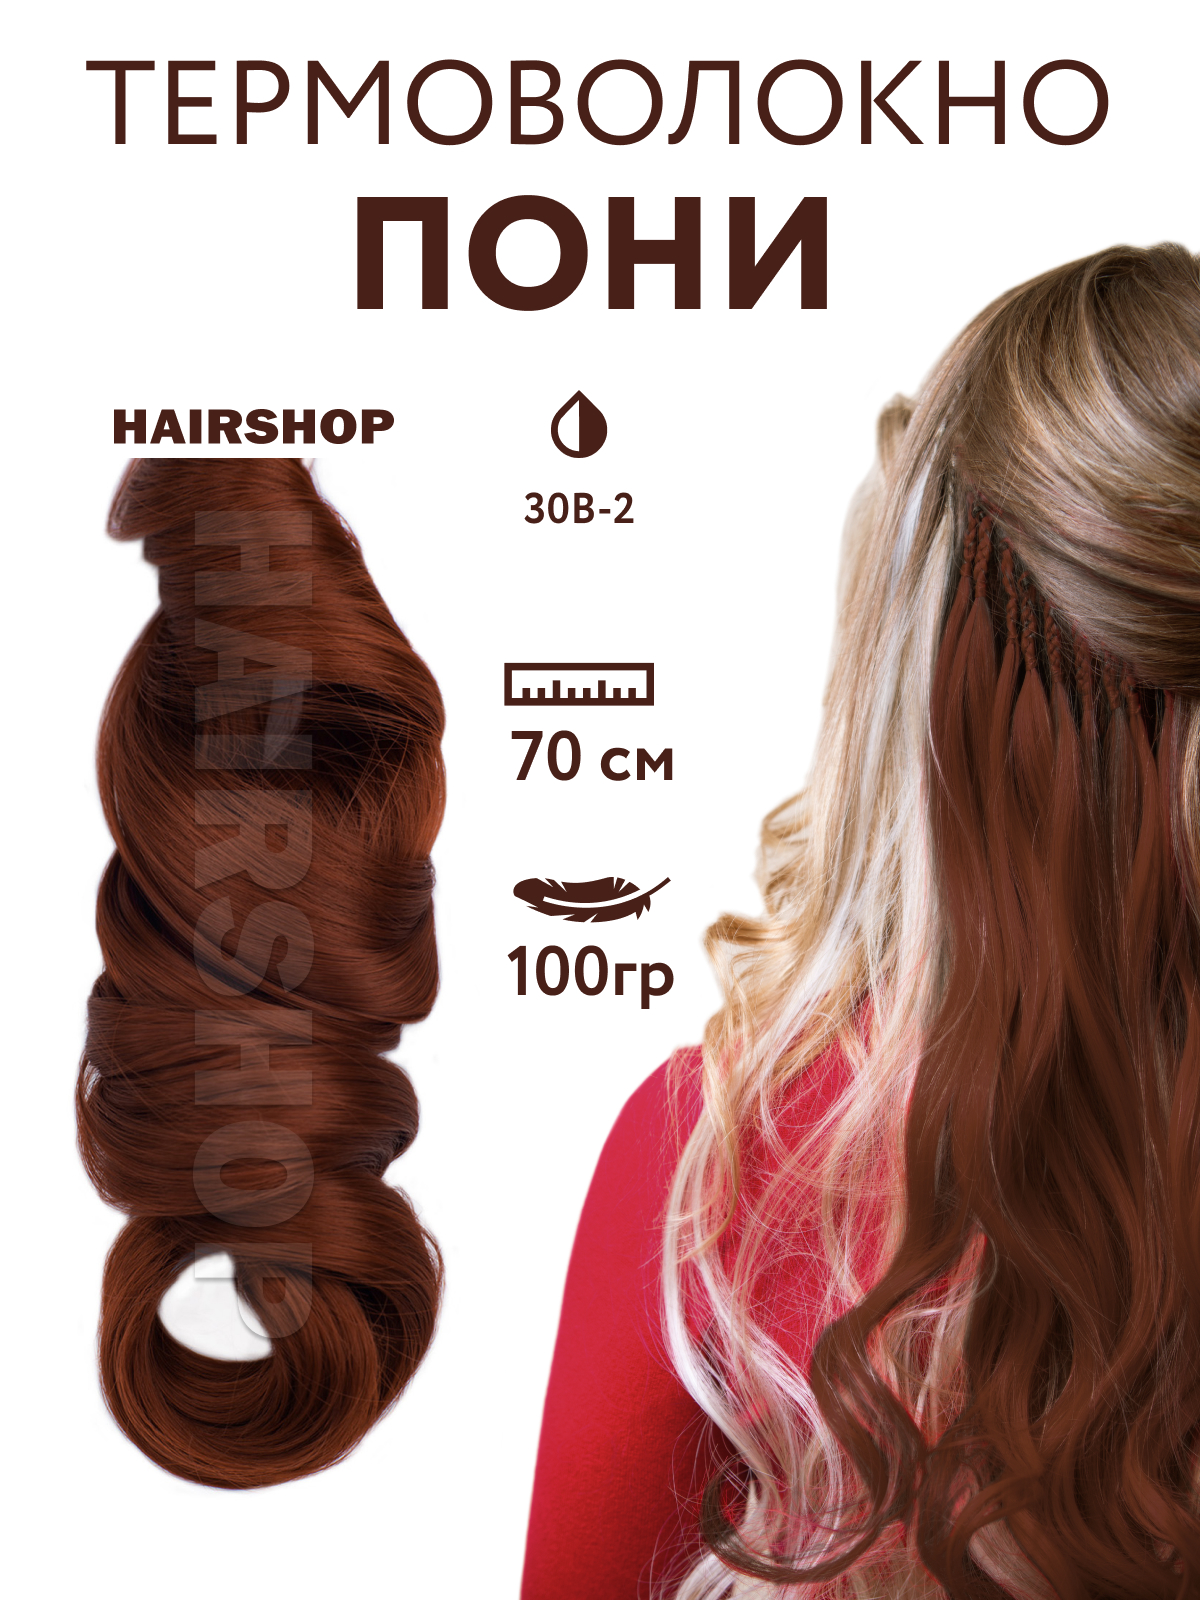 Канекалон HAIRSHOP Пони HairUp для точечного афронаращивания 30B-2 Натурально рыжий 1,4м канекалон hairshop пони hairup для точечного афронаращивания осенний листопад 1 4м